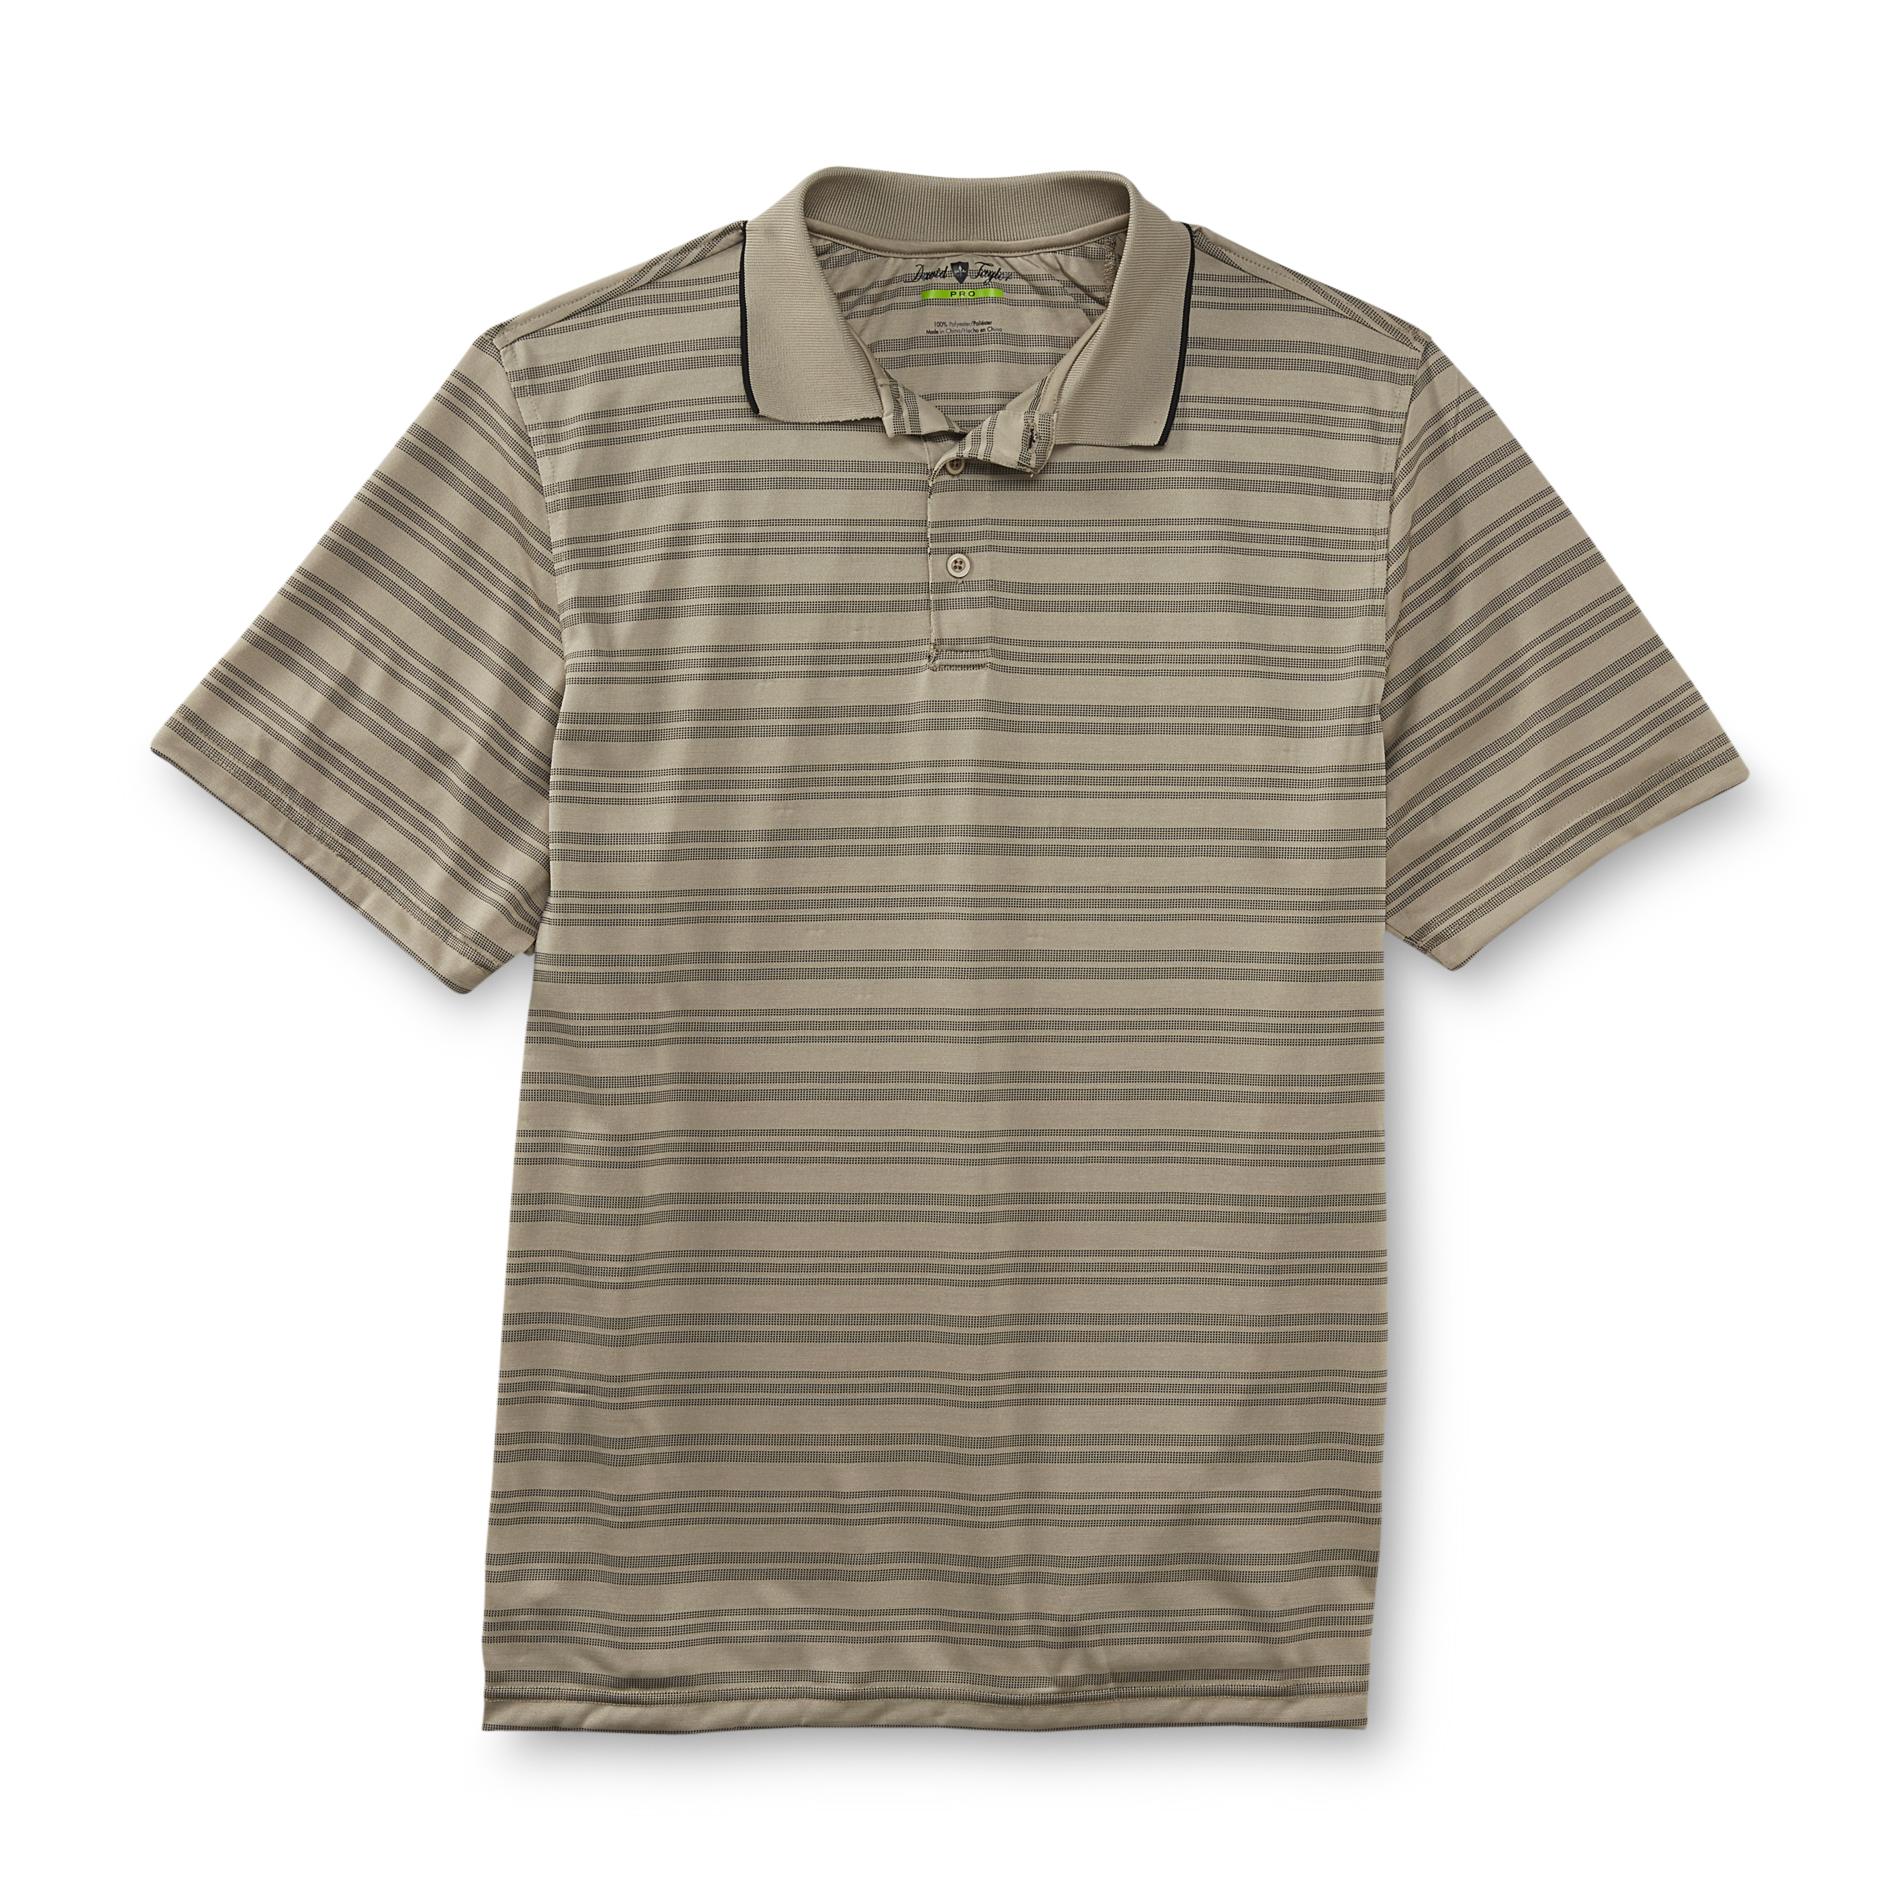 David Taylor Collection Men's Polo Shirt - Striped